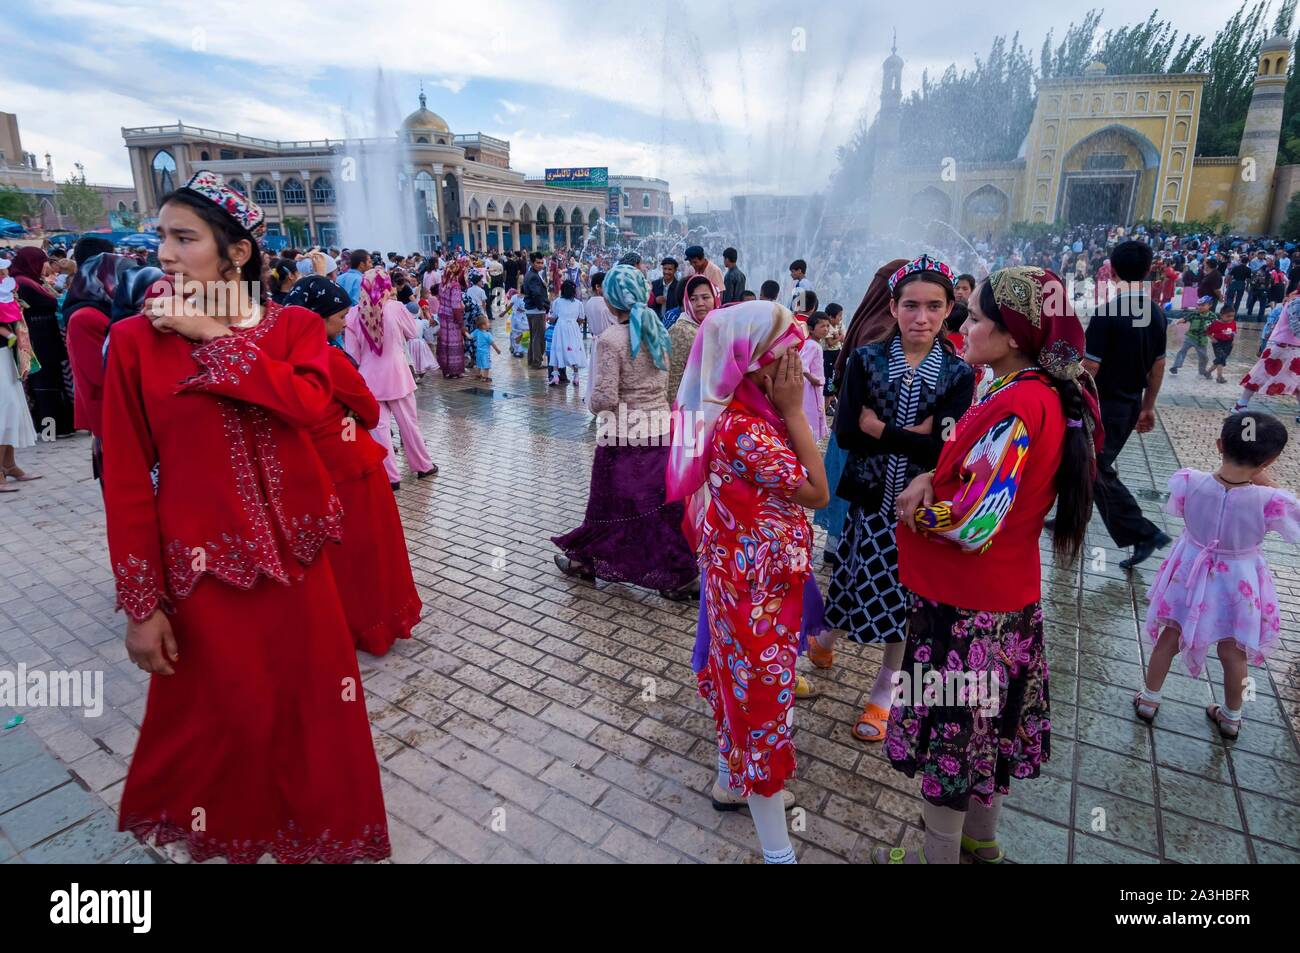 China, Xinjiang Uighur autonomous region, Kashgar, Id Kha Square, crowd gathered during the water festival, a local holiday Stock Photo